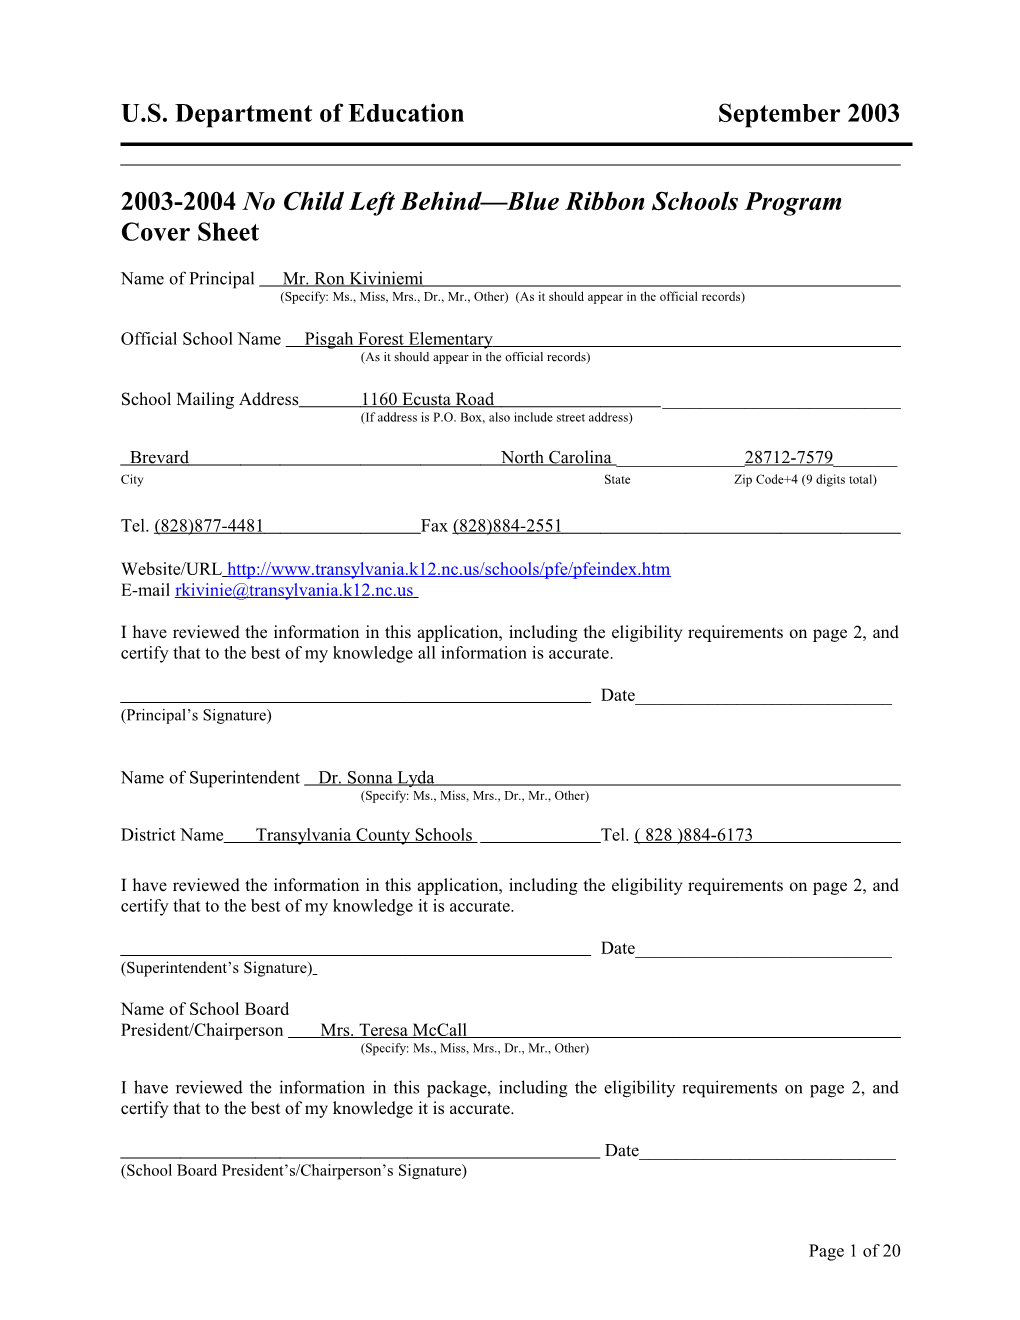 Pisgah Forest Elementary School 2004 No Child Left Behind-Blue Ribbon School Application